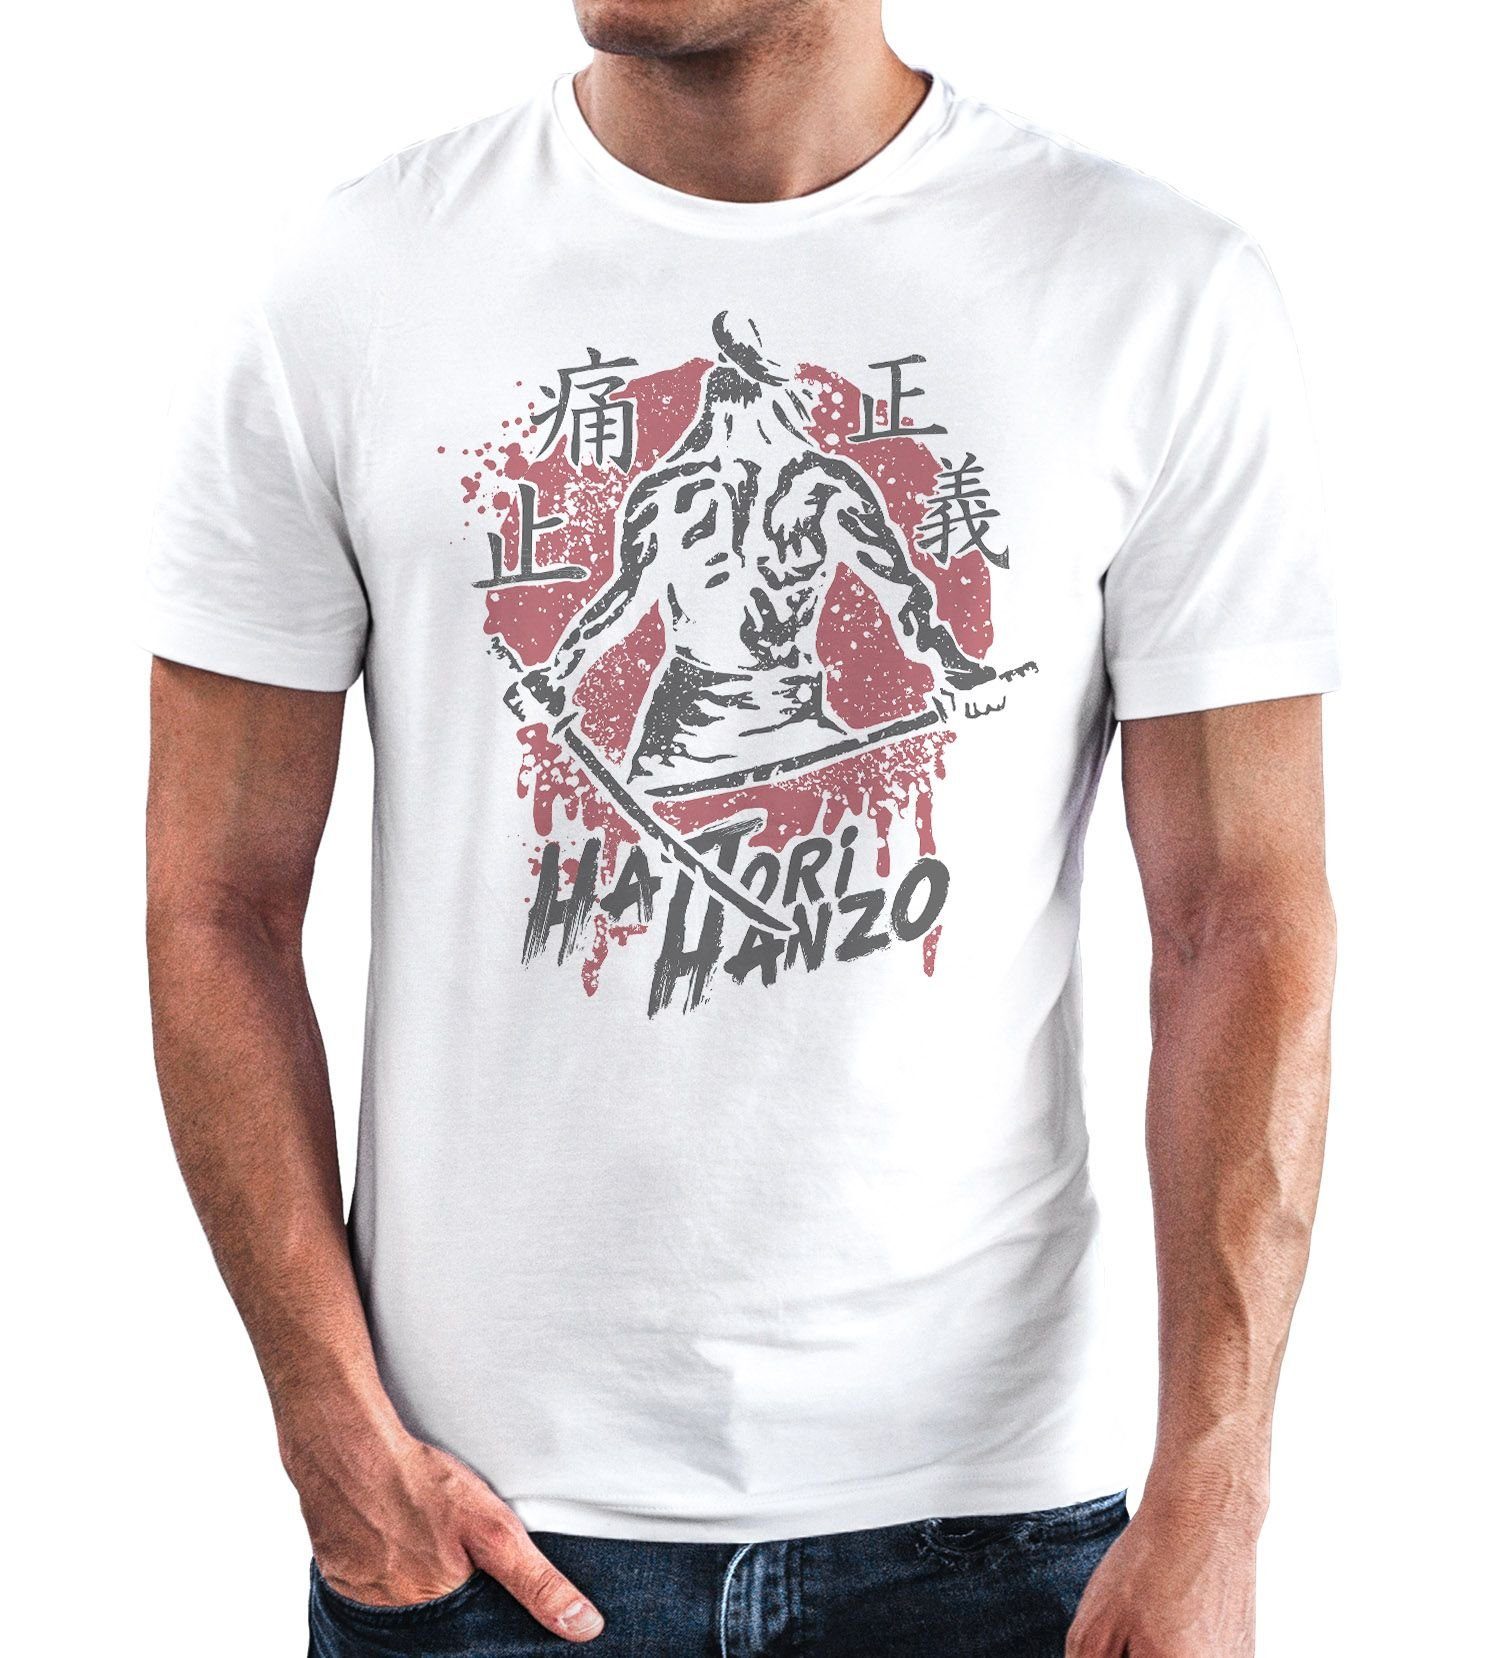 Neverless Print-Shirt Neverless® Herren T-Shirt Samurai japanische Schriftzeichen Schriftzug Hattori Hanzo Fashion Streetstyle mit Print weiß